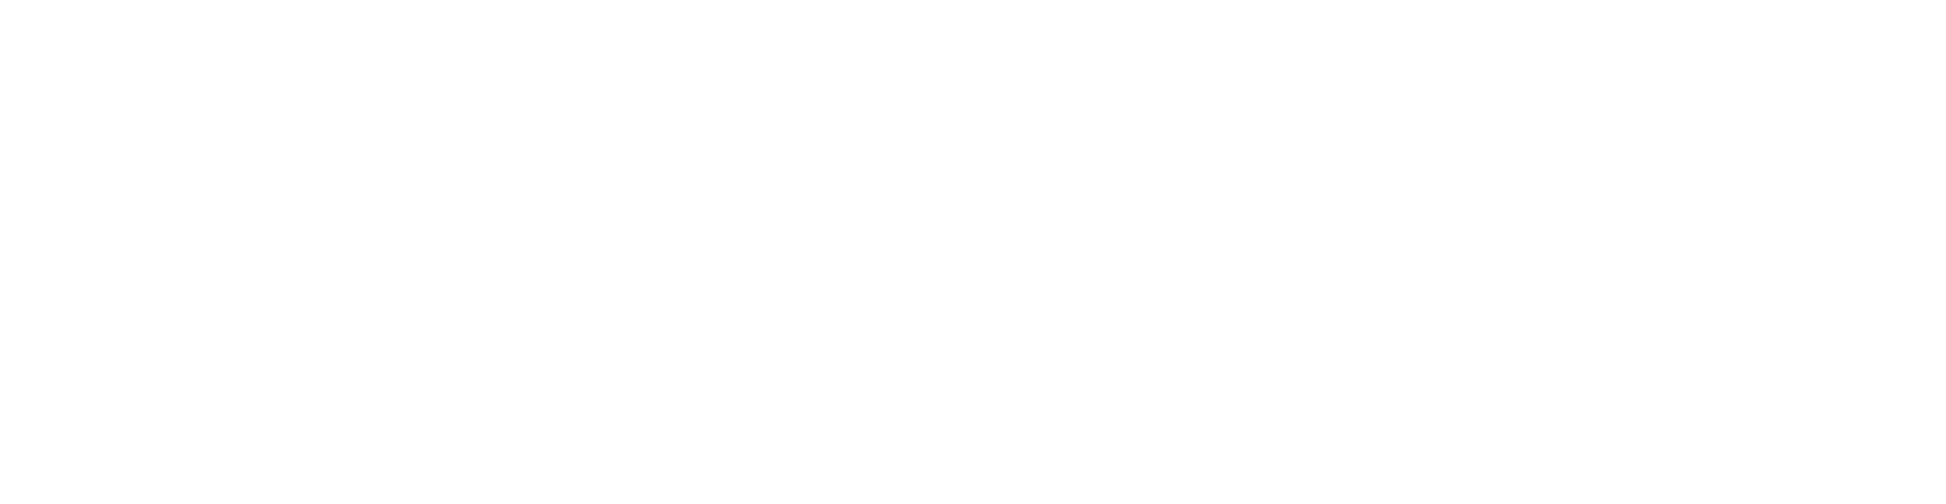 Guardian Angels Training logo